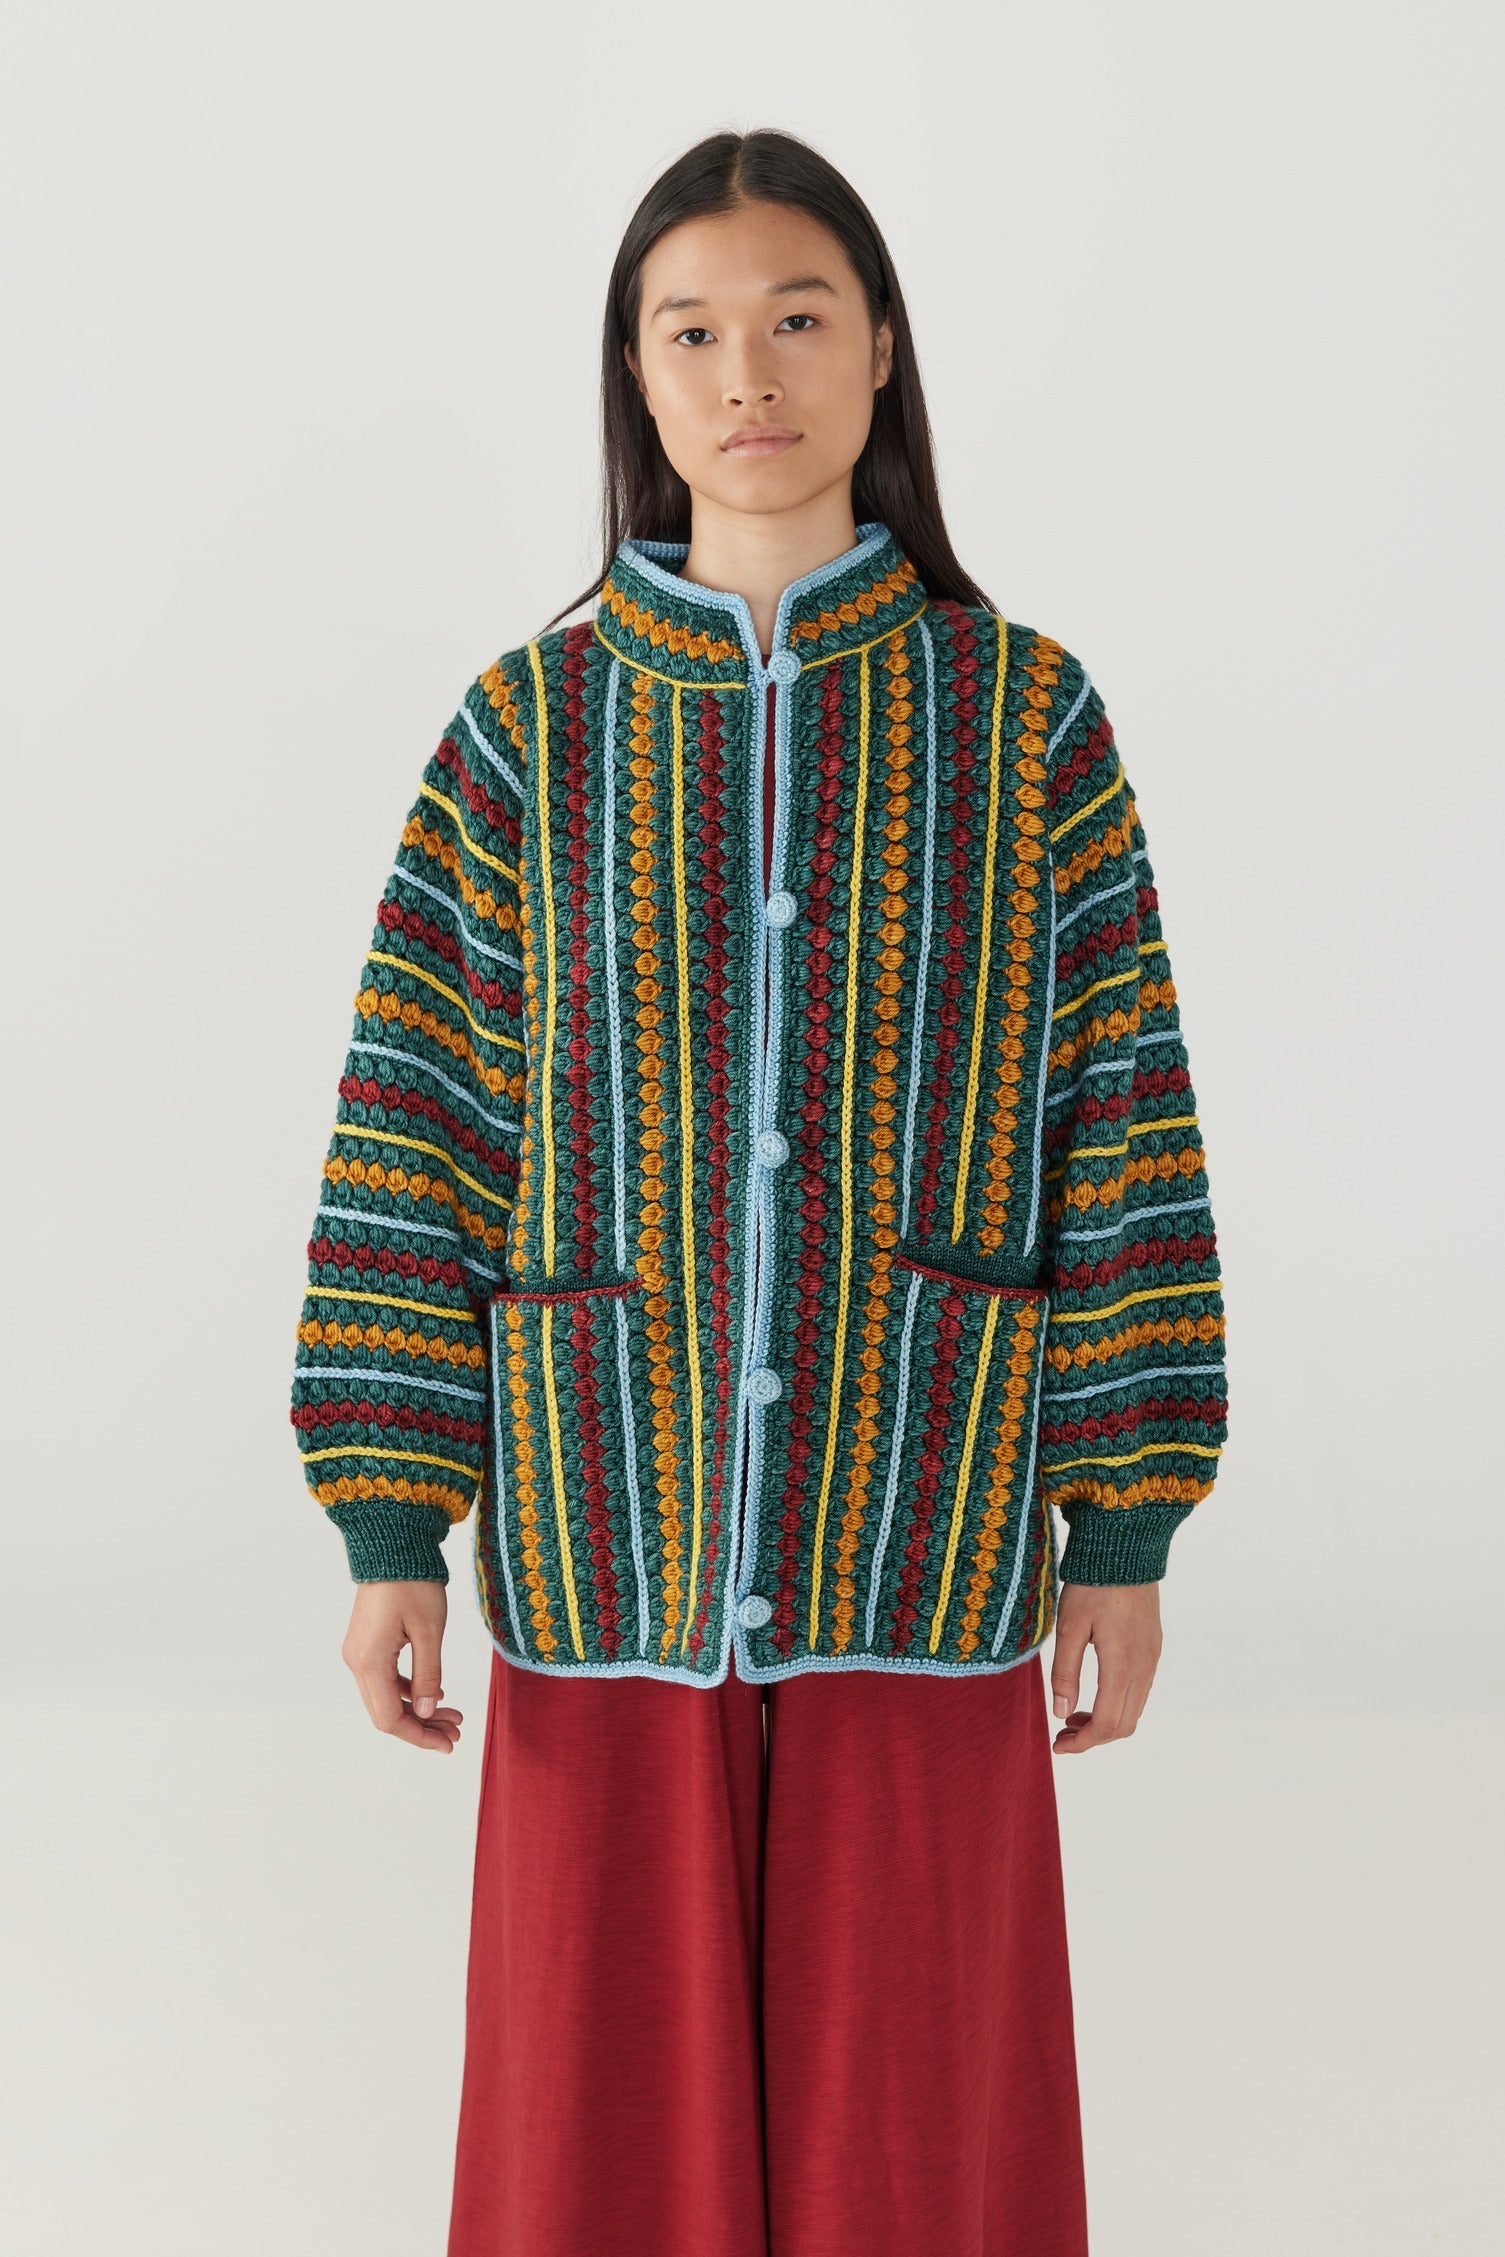 Adult Retrospective Crochet Jacket - Peacock+Model is 5'8" | 31.5" Bust | 25" Waist | 36" Hips | size 2, wearing a size Medium/Large